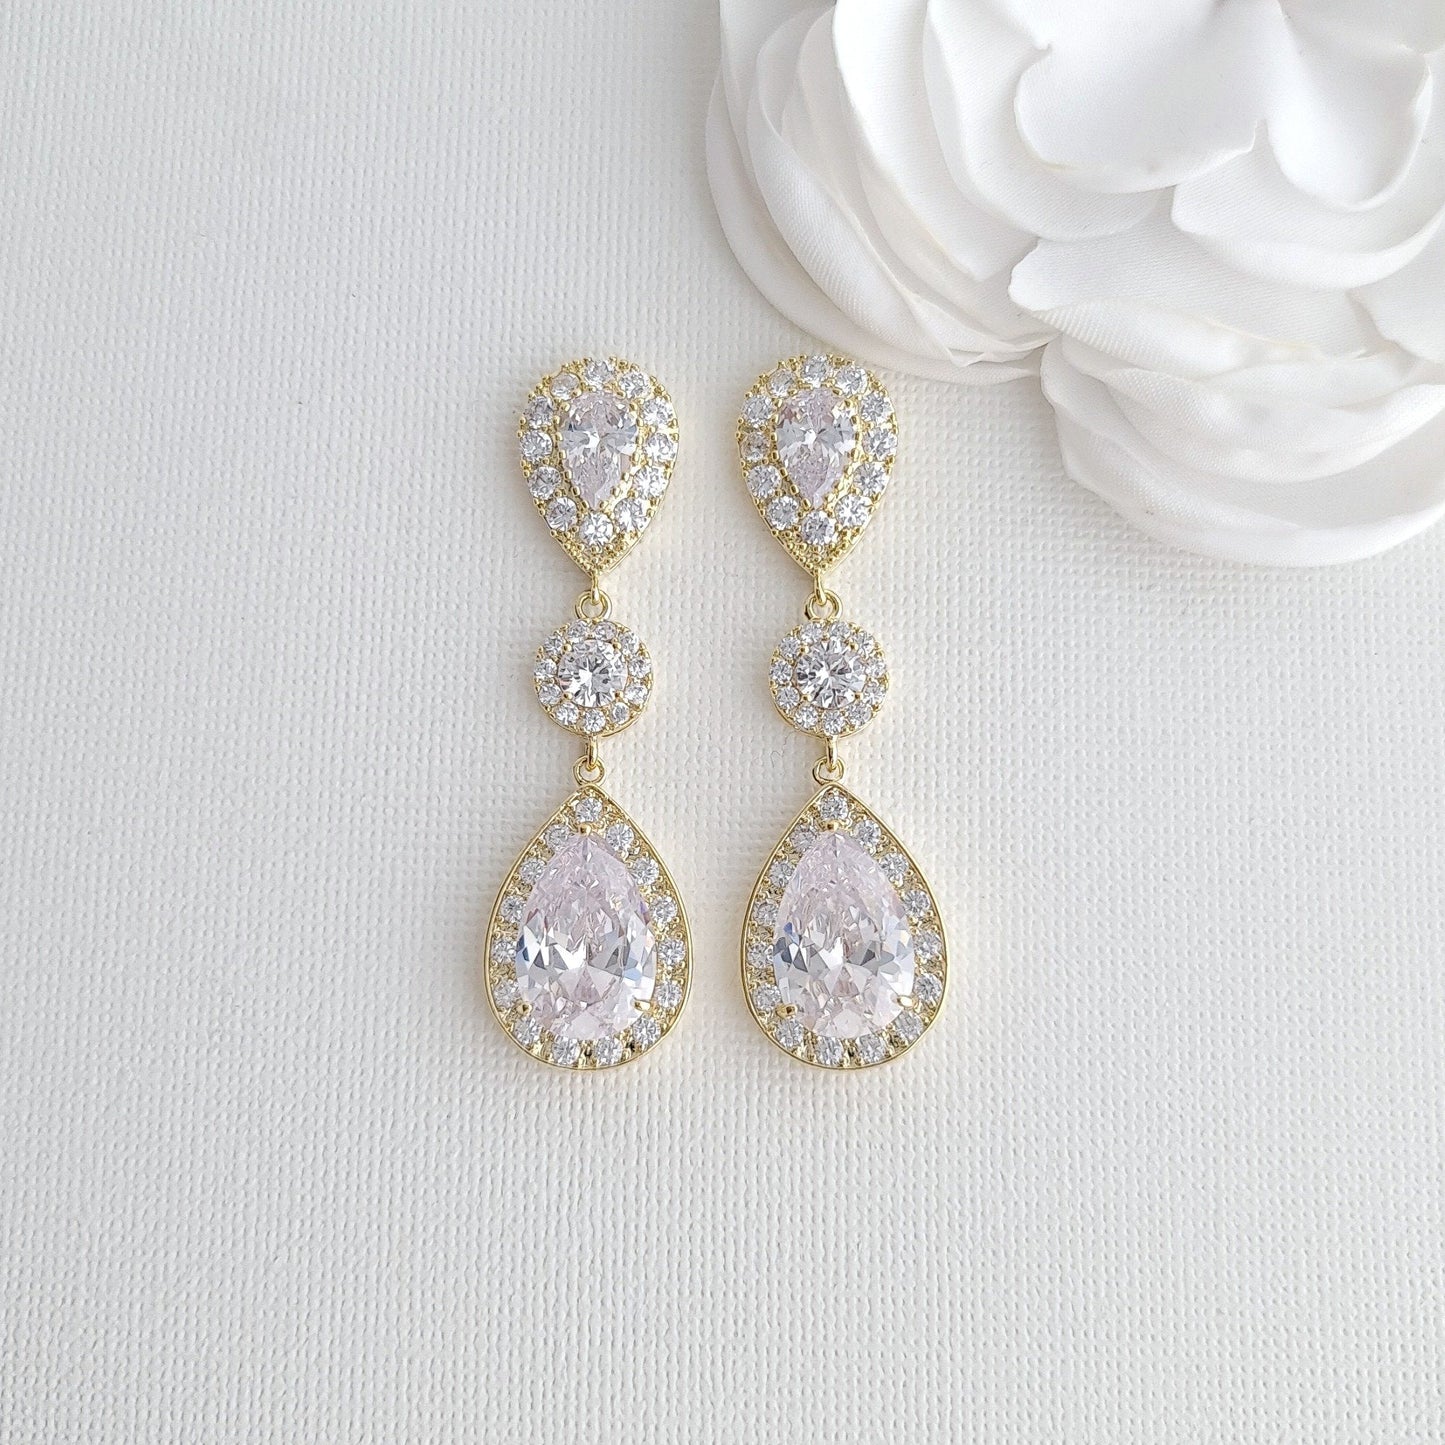 Big Wedding Earrings with Large CZ Teardrops-Penelope - PoetryDesigns